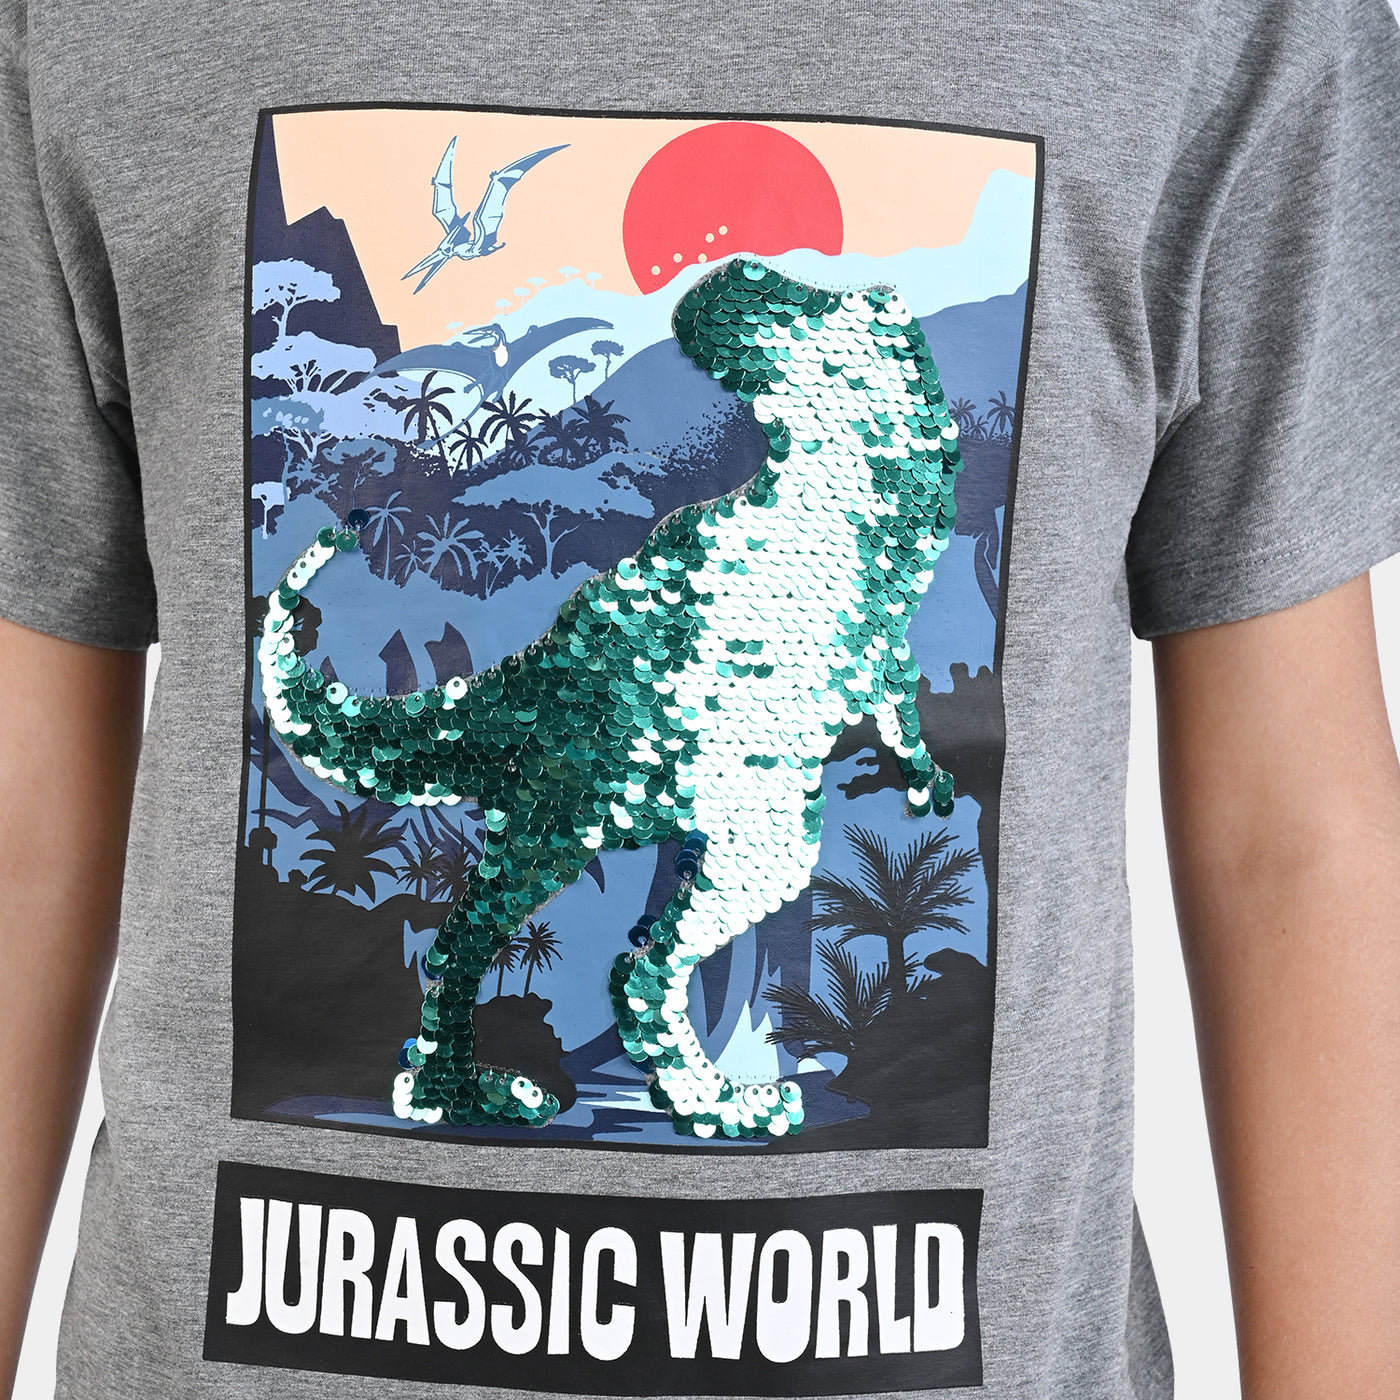 Boys Lycra Jersey T-Shirt Dinosaur World-GREY